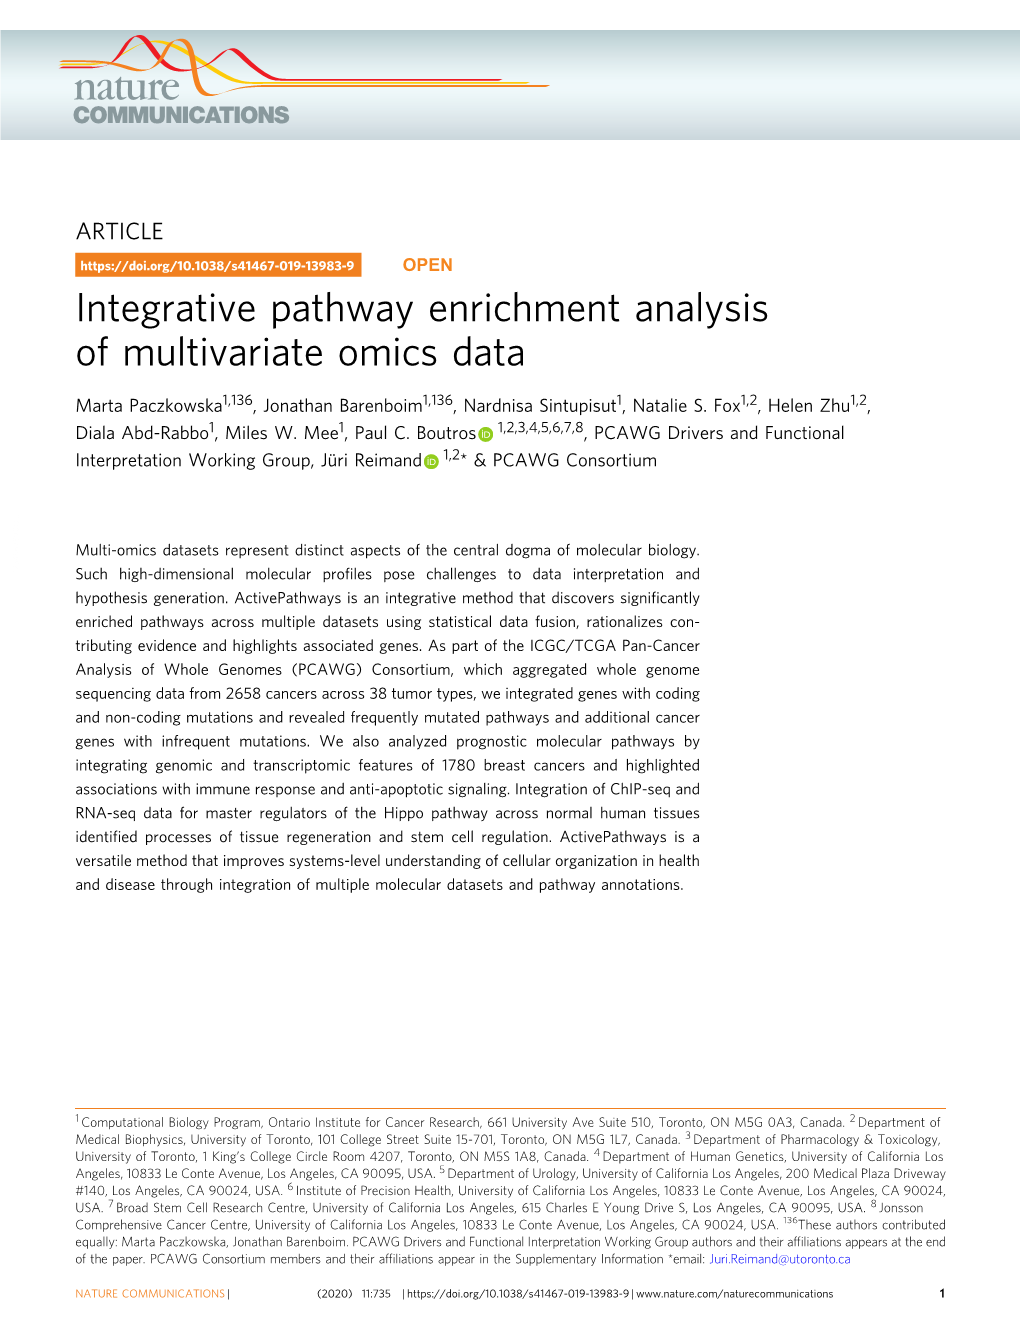 Integrative Pathway Enrichment Analysis of Multivariate Omics Data